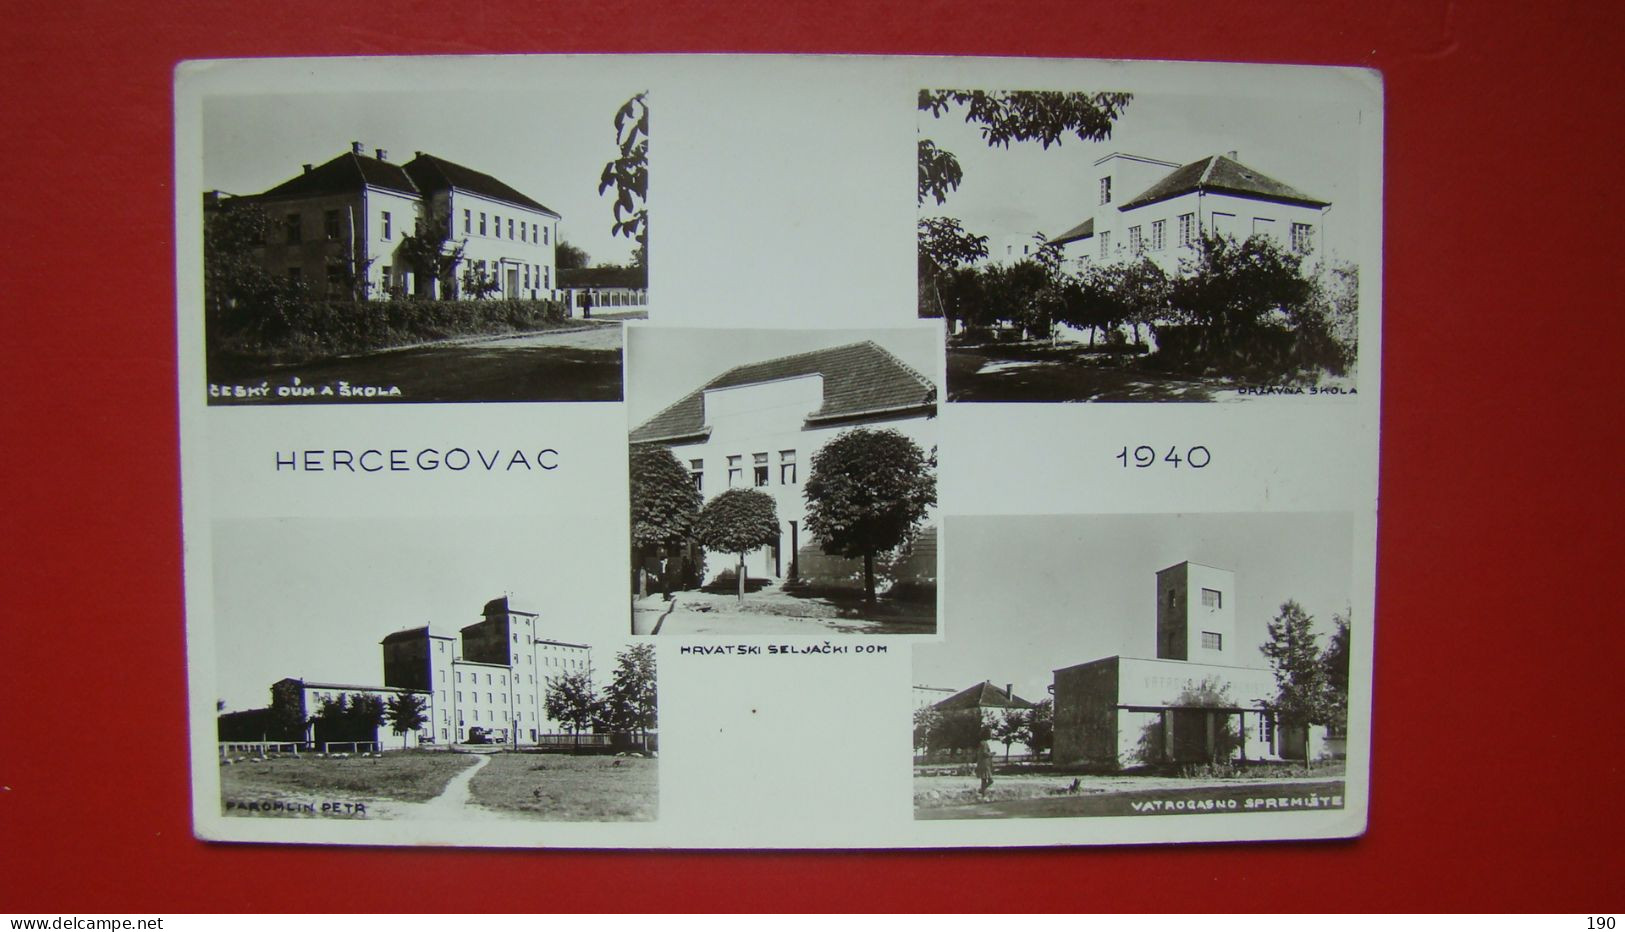 Hercegovac(1940). Cesky Dum A Skola,Hrvatski Seljacki Dom,Vatrogasno Spremiste. - Kroatien